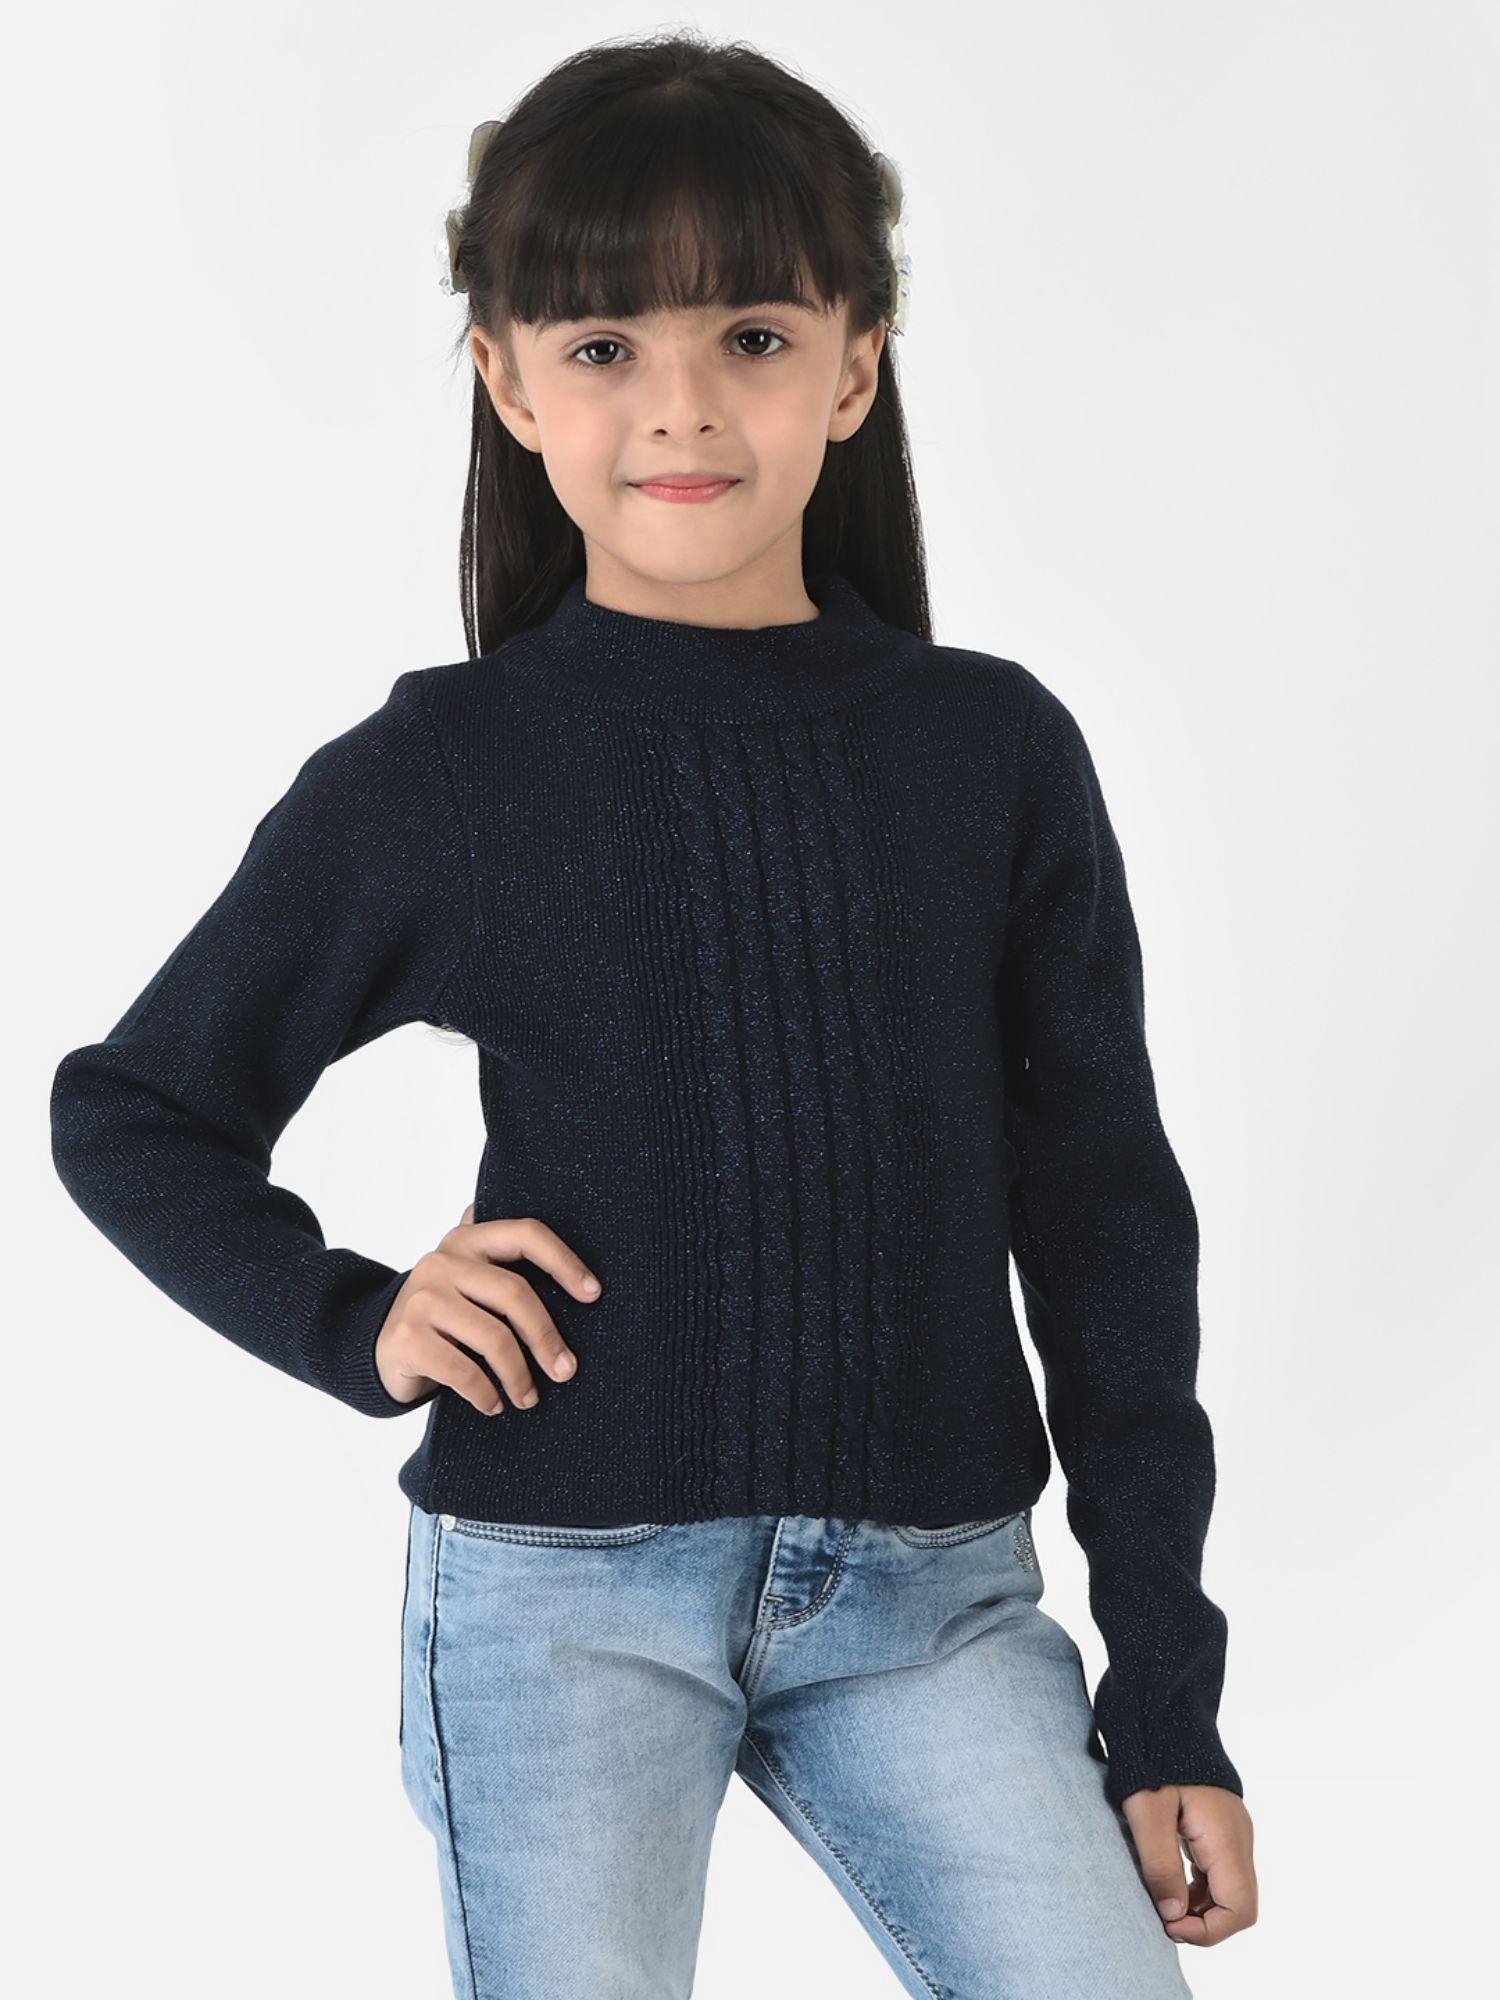 girls-navy-blue-sweater-in-self-designed-print